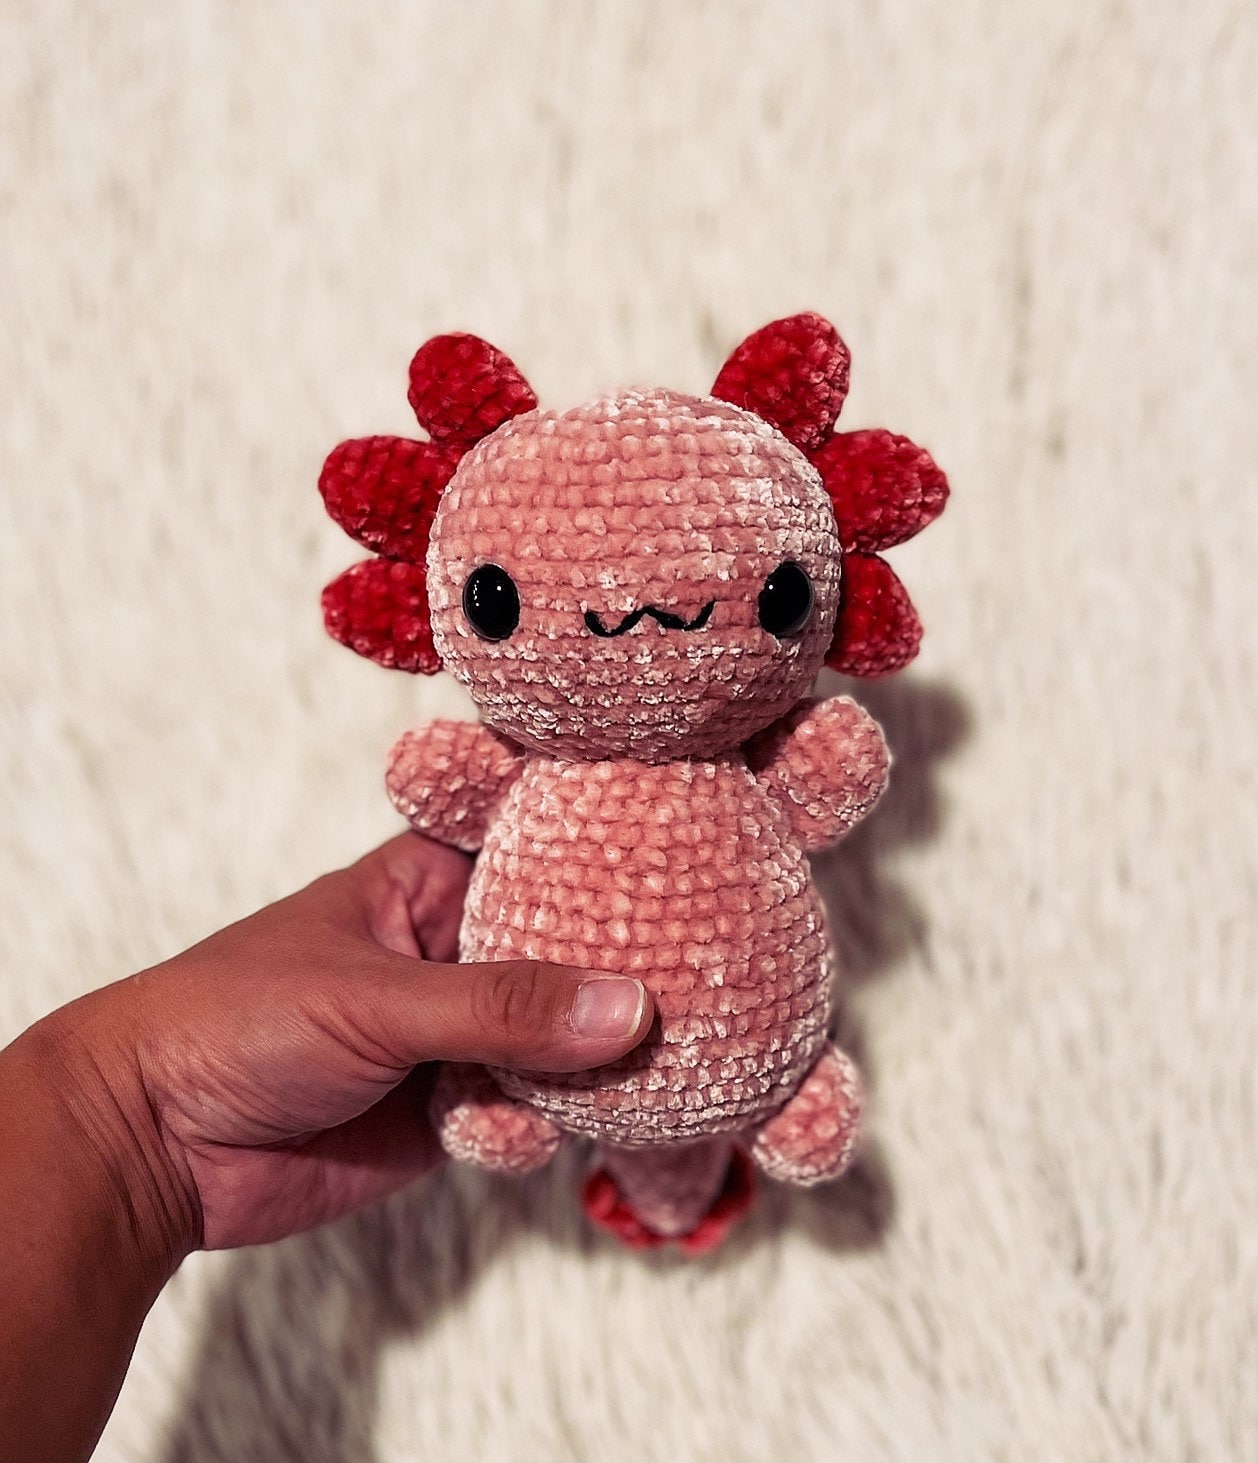 Axolotl Crochet Kit – Idaho Cottage Creations